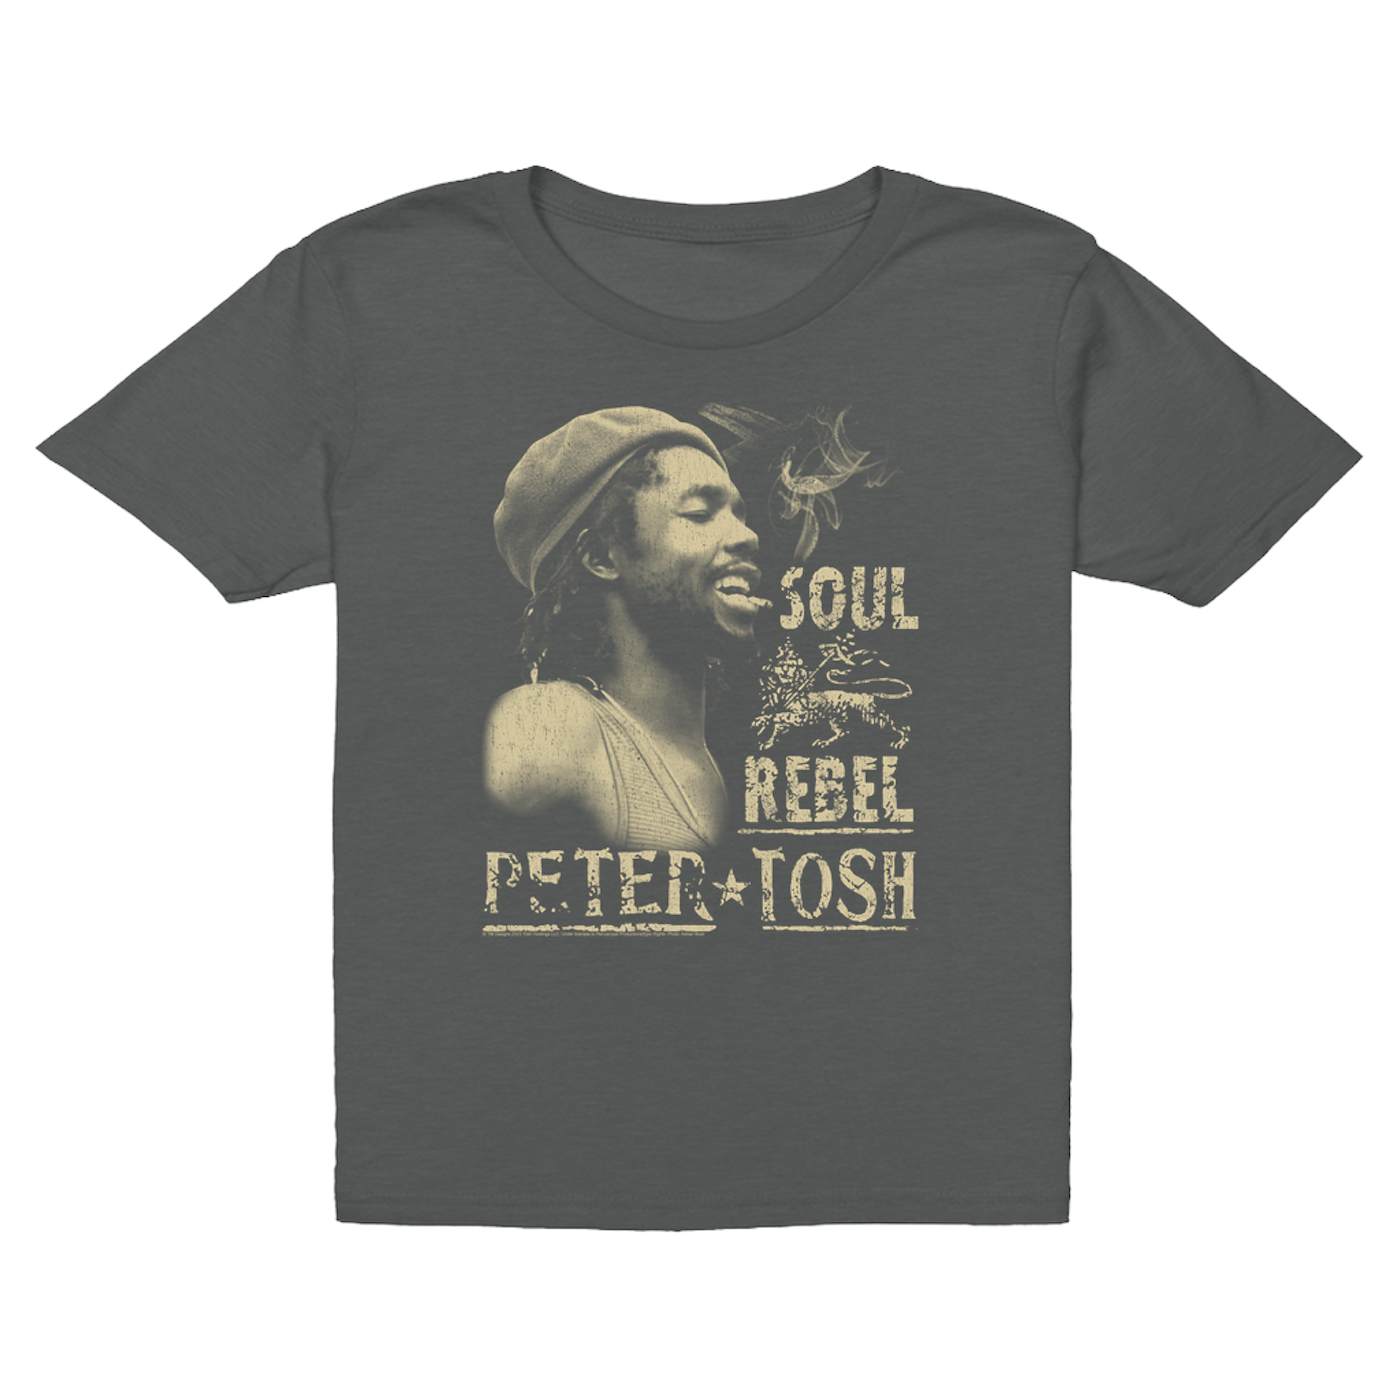 Peter Tosh Kids T-Shirt | Soul Rebel Peter Tosh Kids T-Shirt